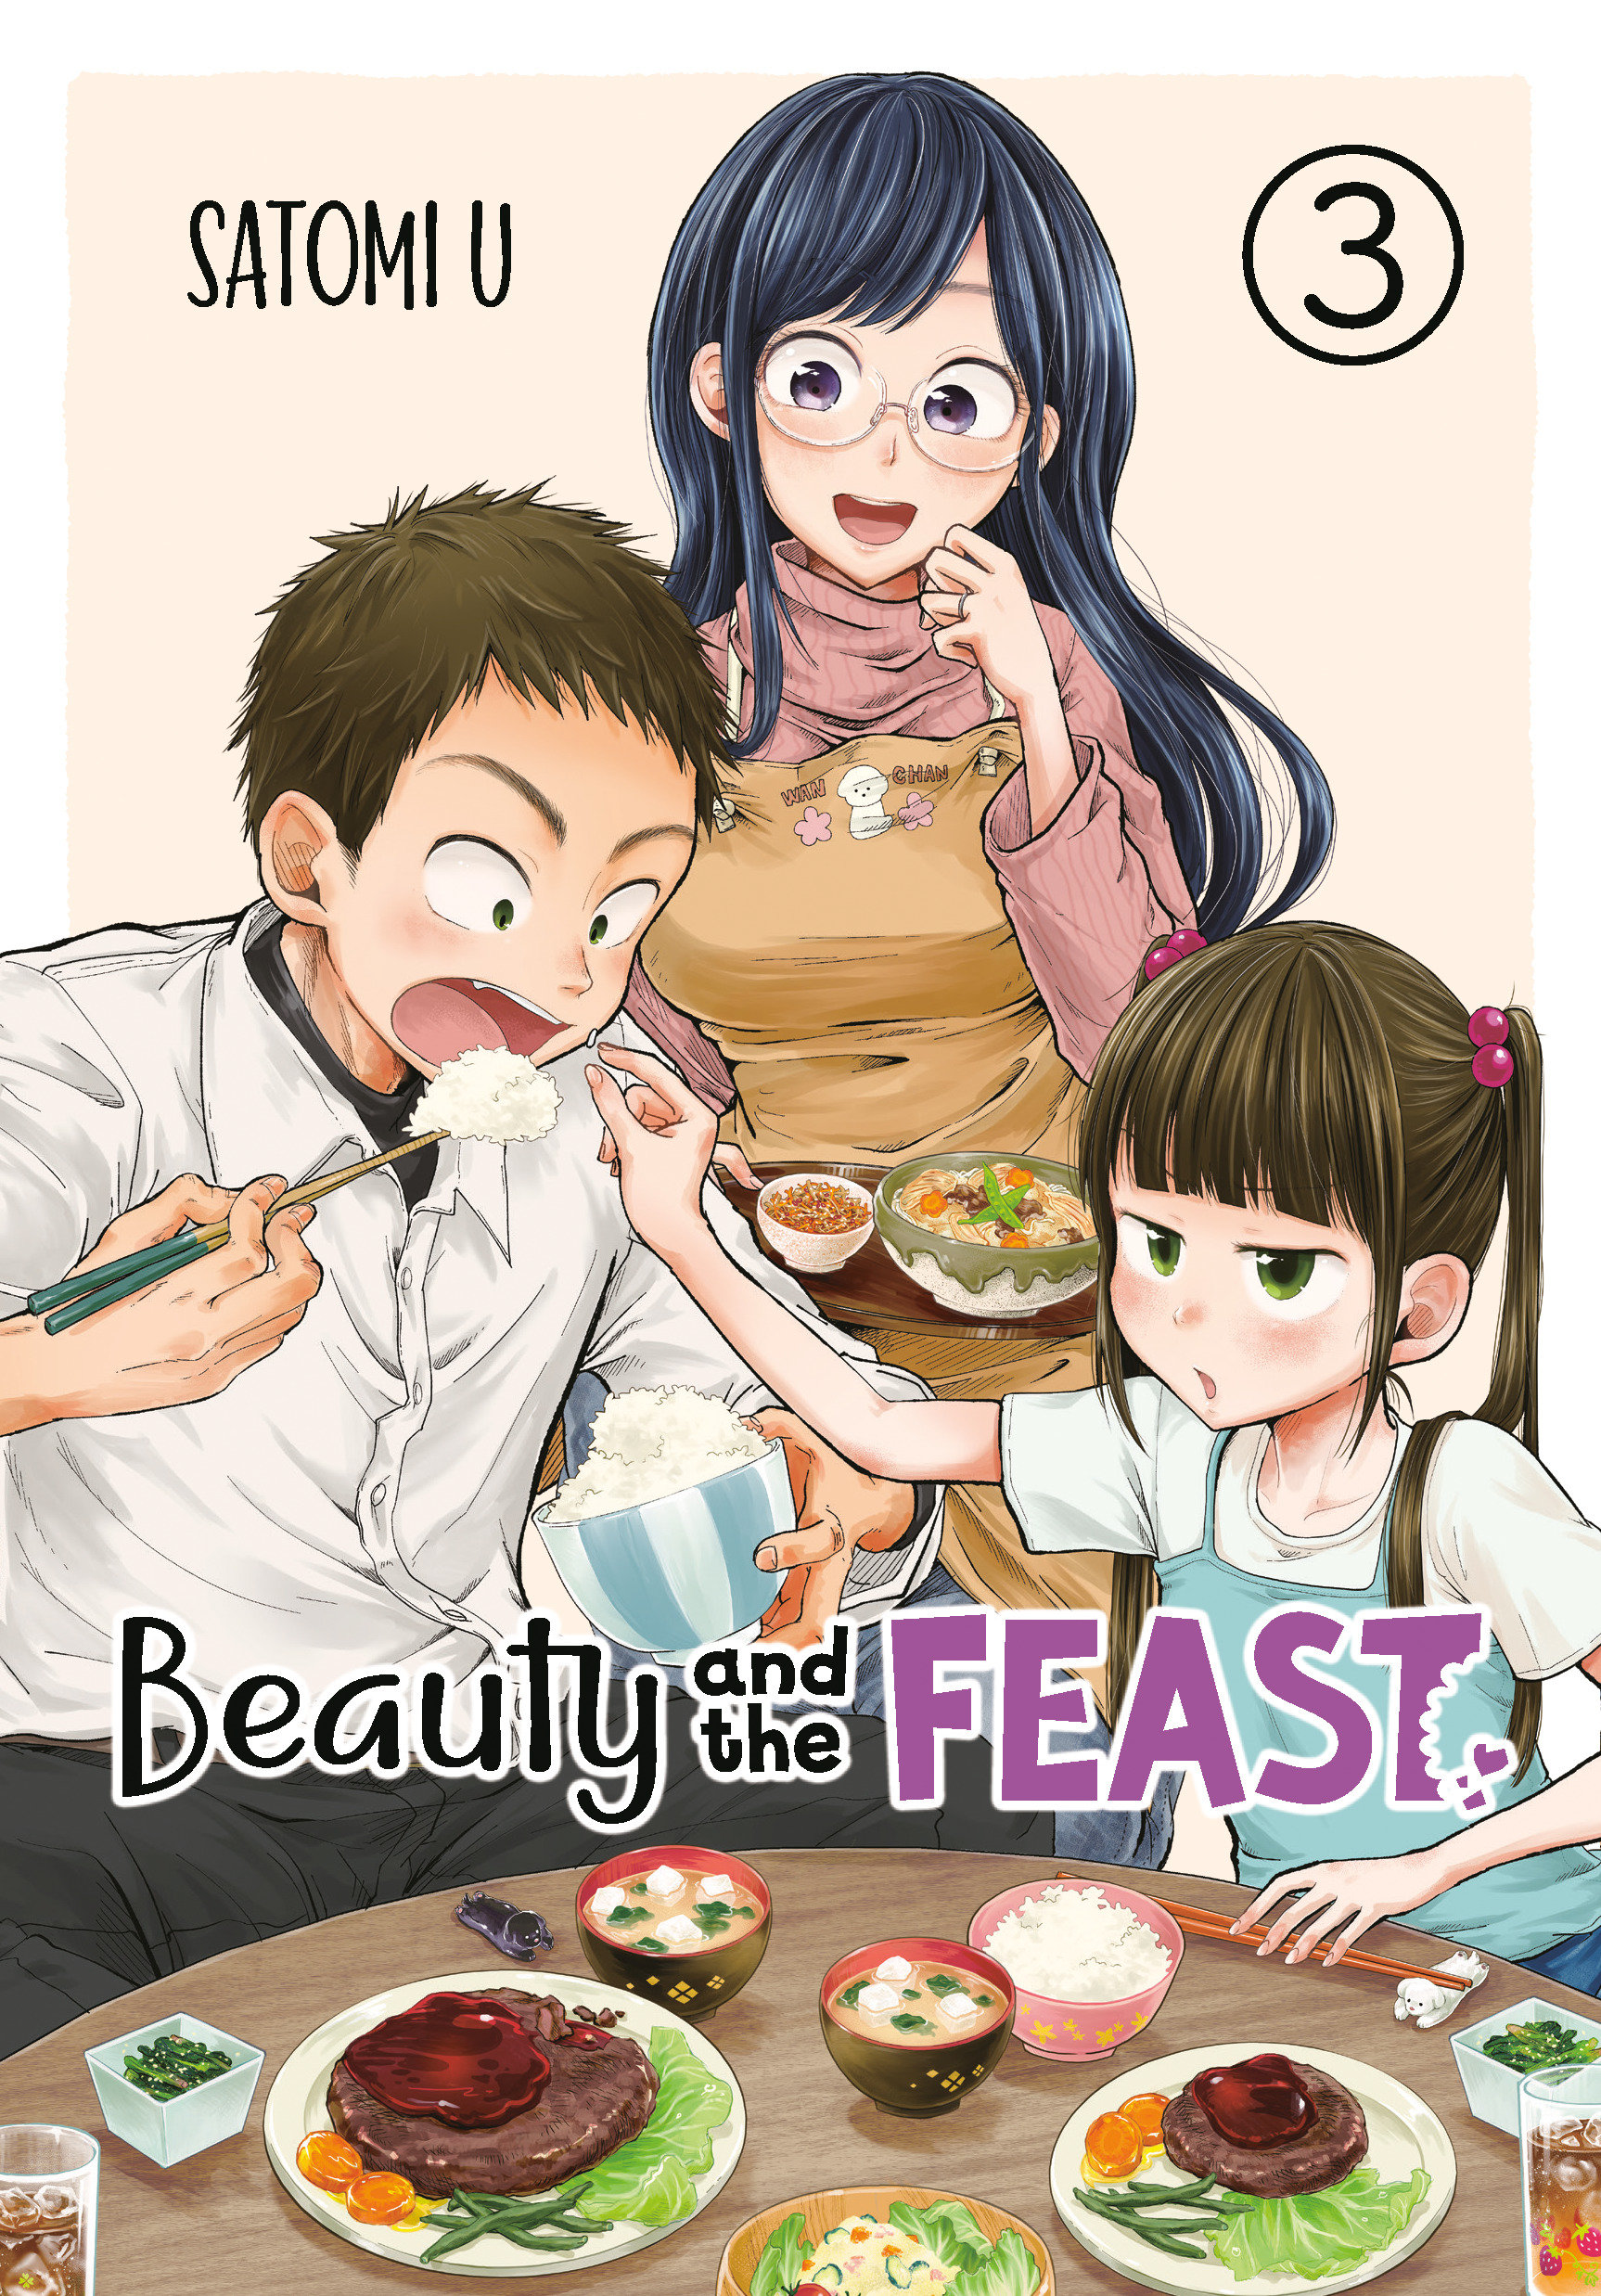 Beauty and the Feast Manga Volume 3